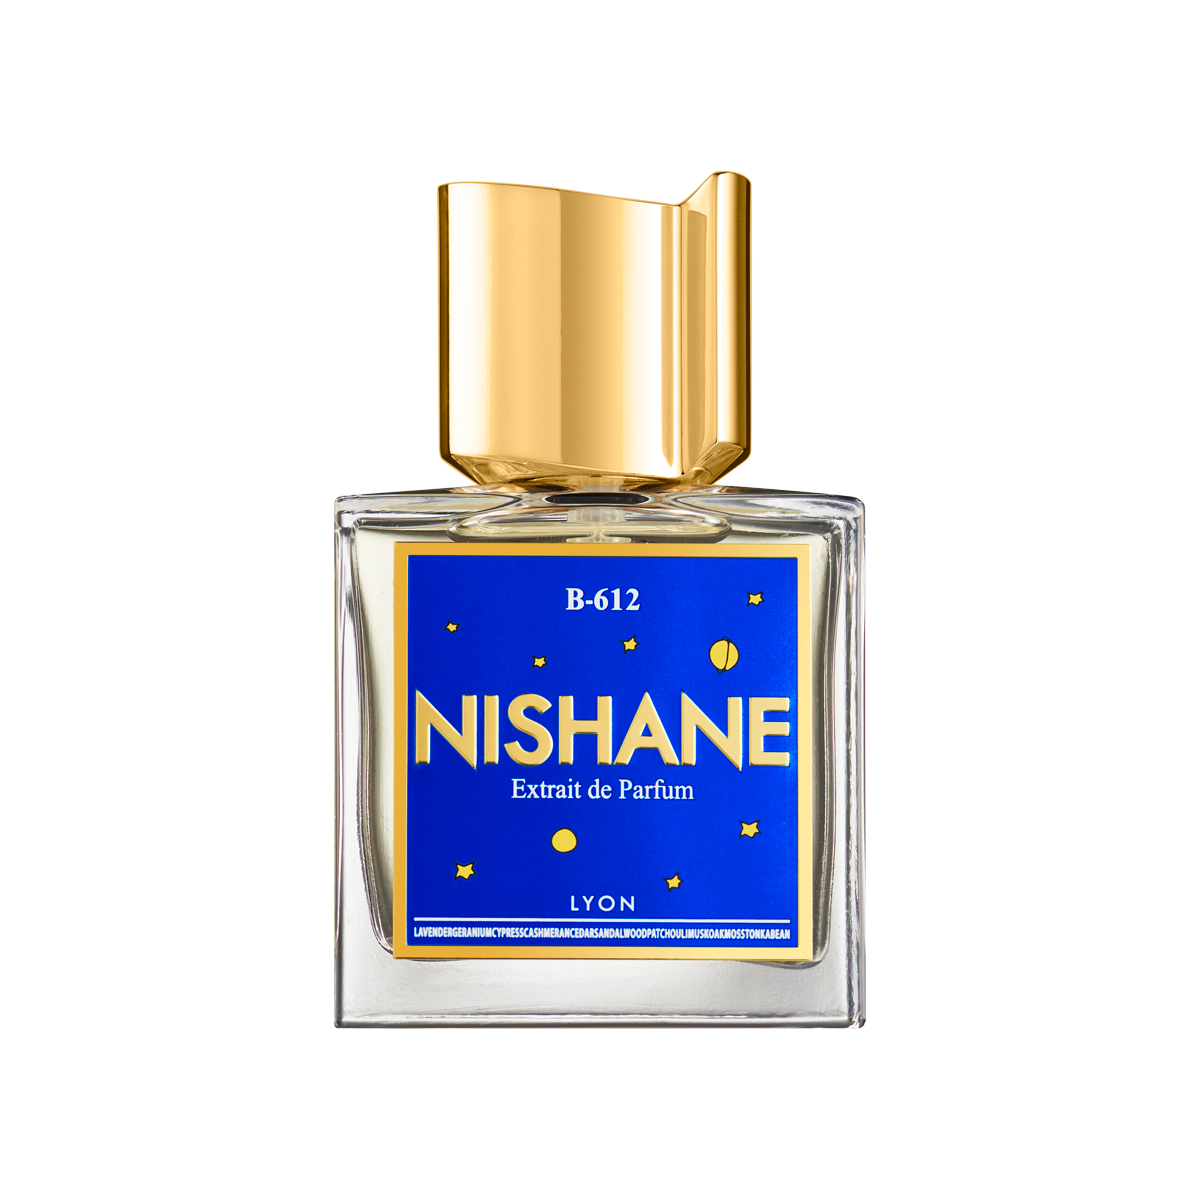 Nishane - B-612 Extrait de Parfum